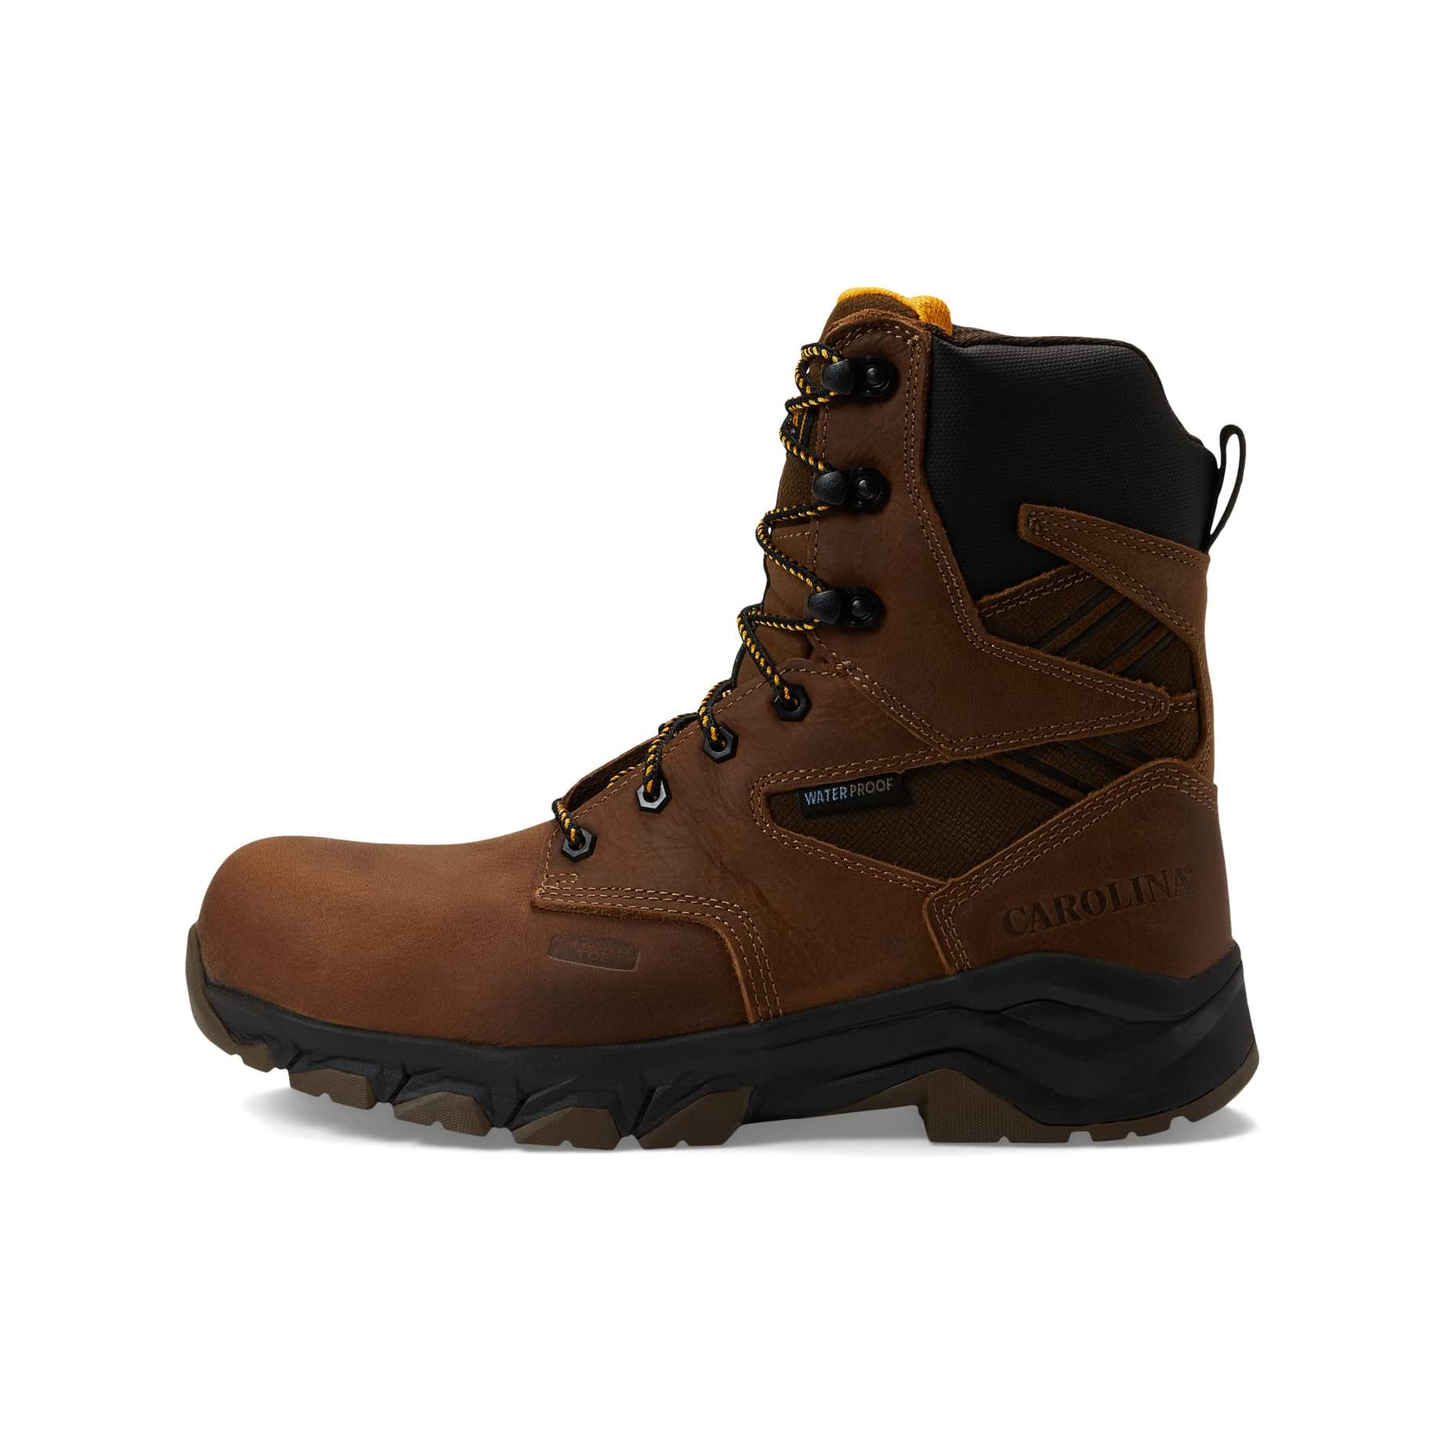 Carolina® Men's 8" Subframe Waterproof Brown Work Boots CA5552